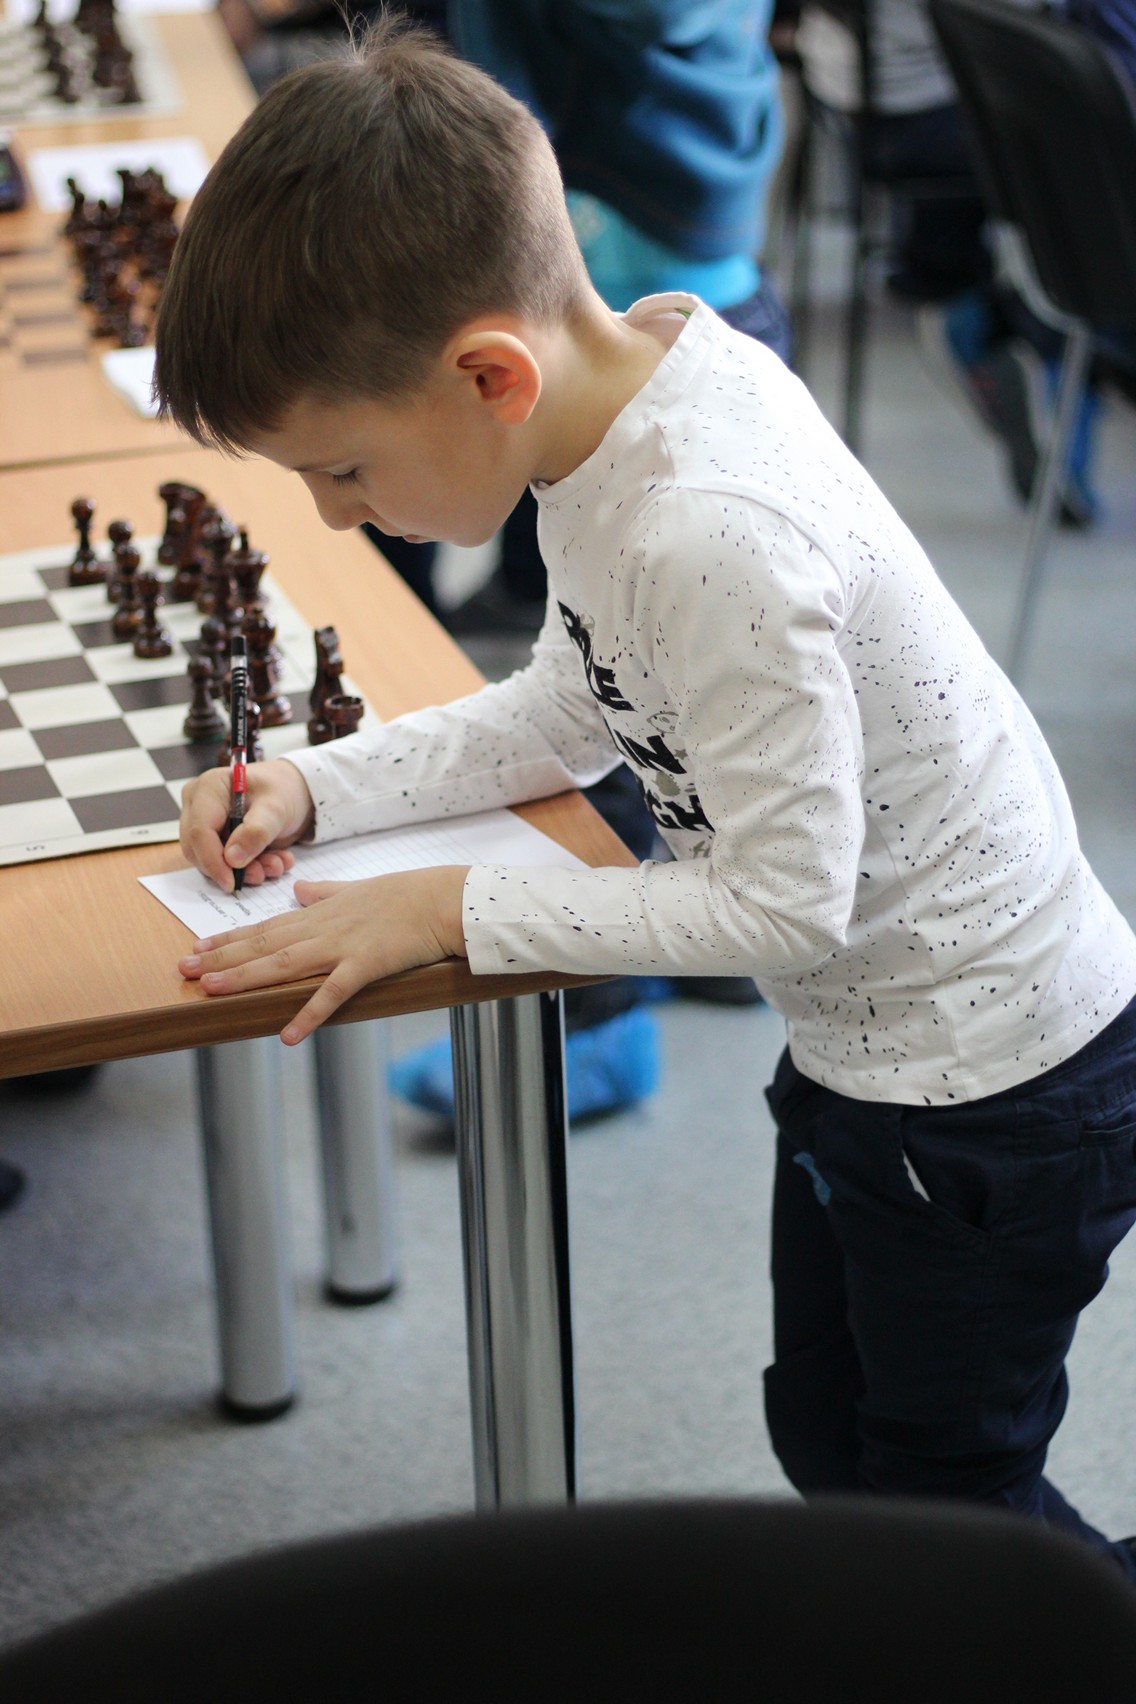 Первенство области по шахматам